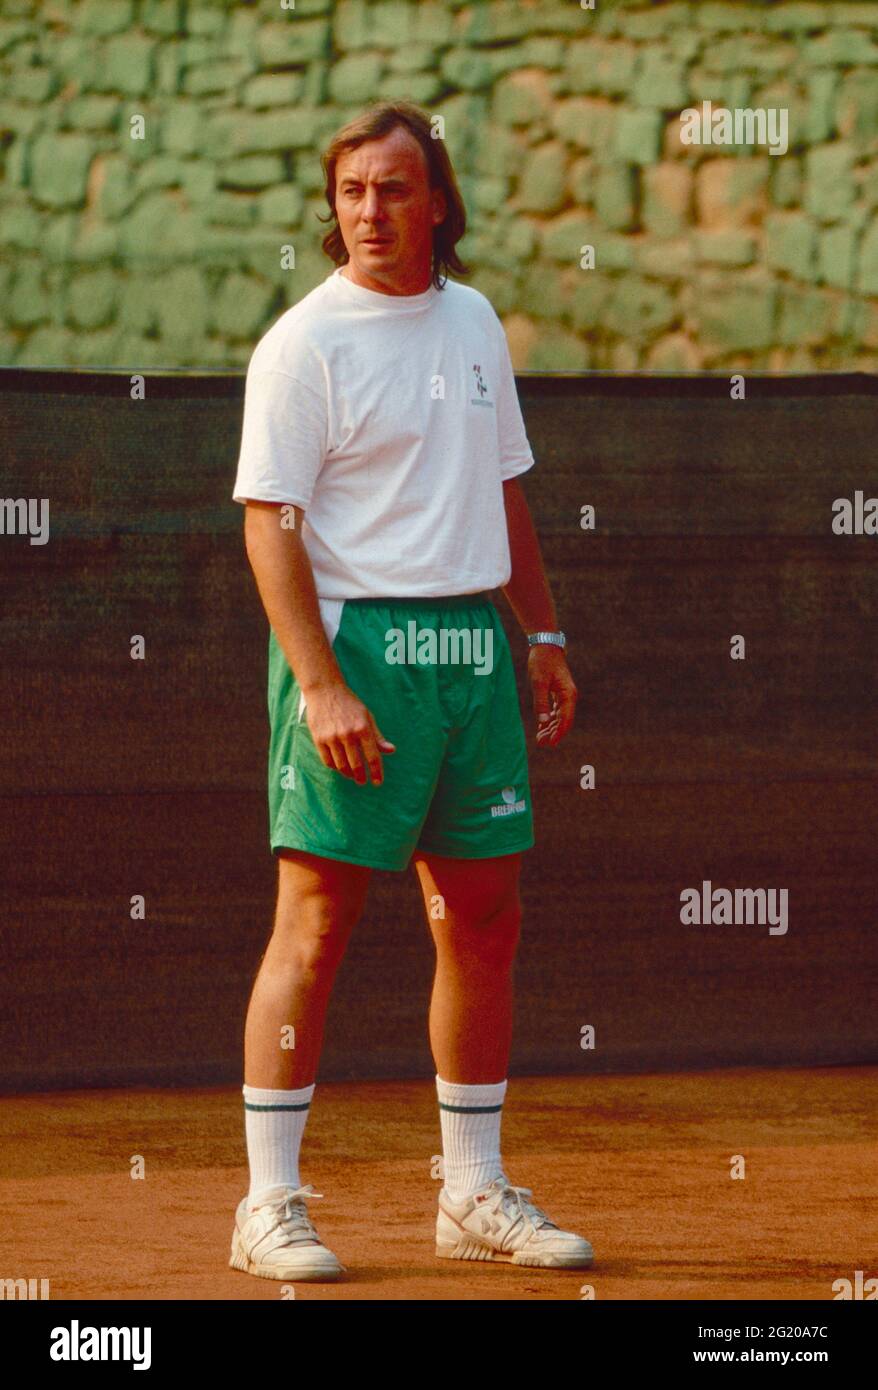 Italian tennis coach Riccardo Piatti, 1990s Stock Photo - Alamy